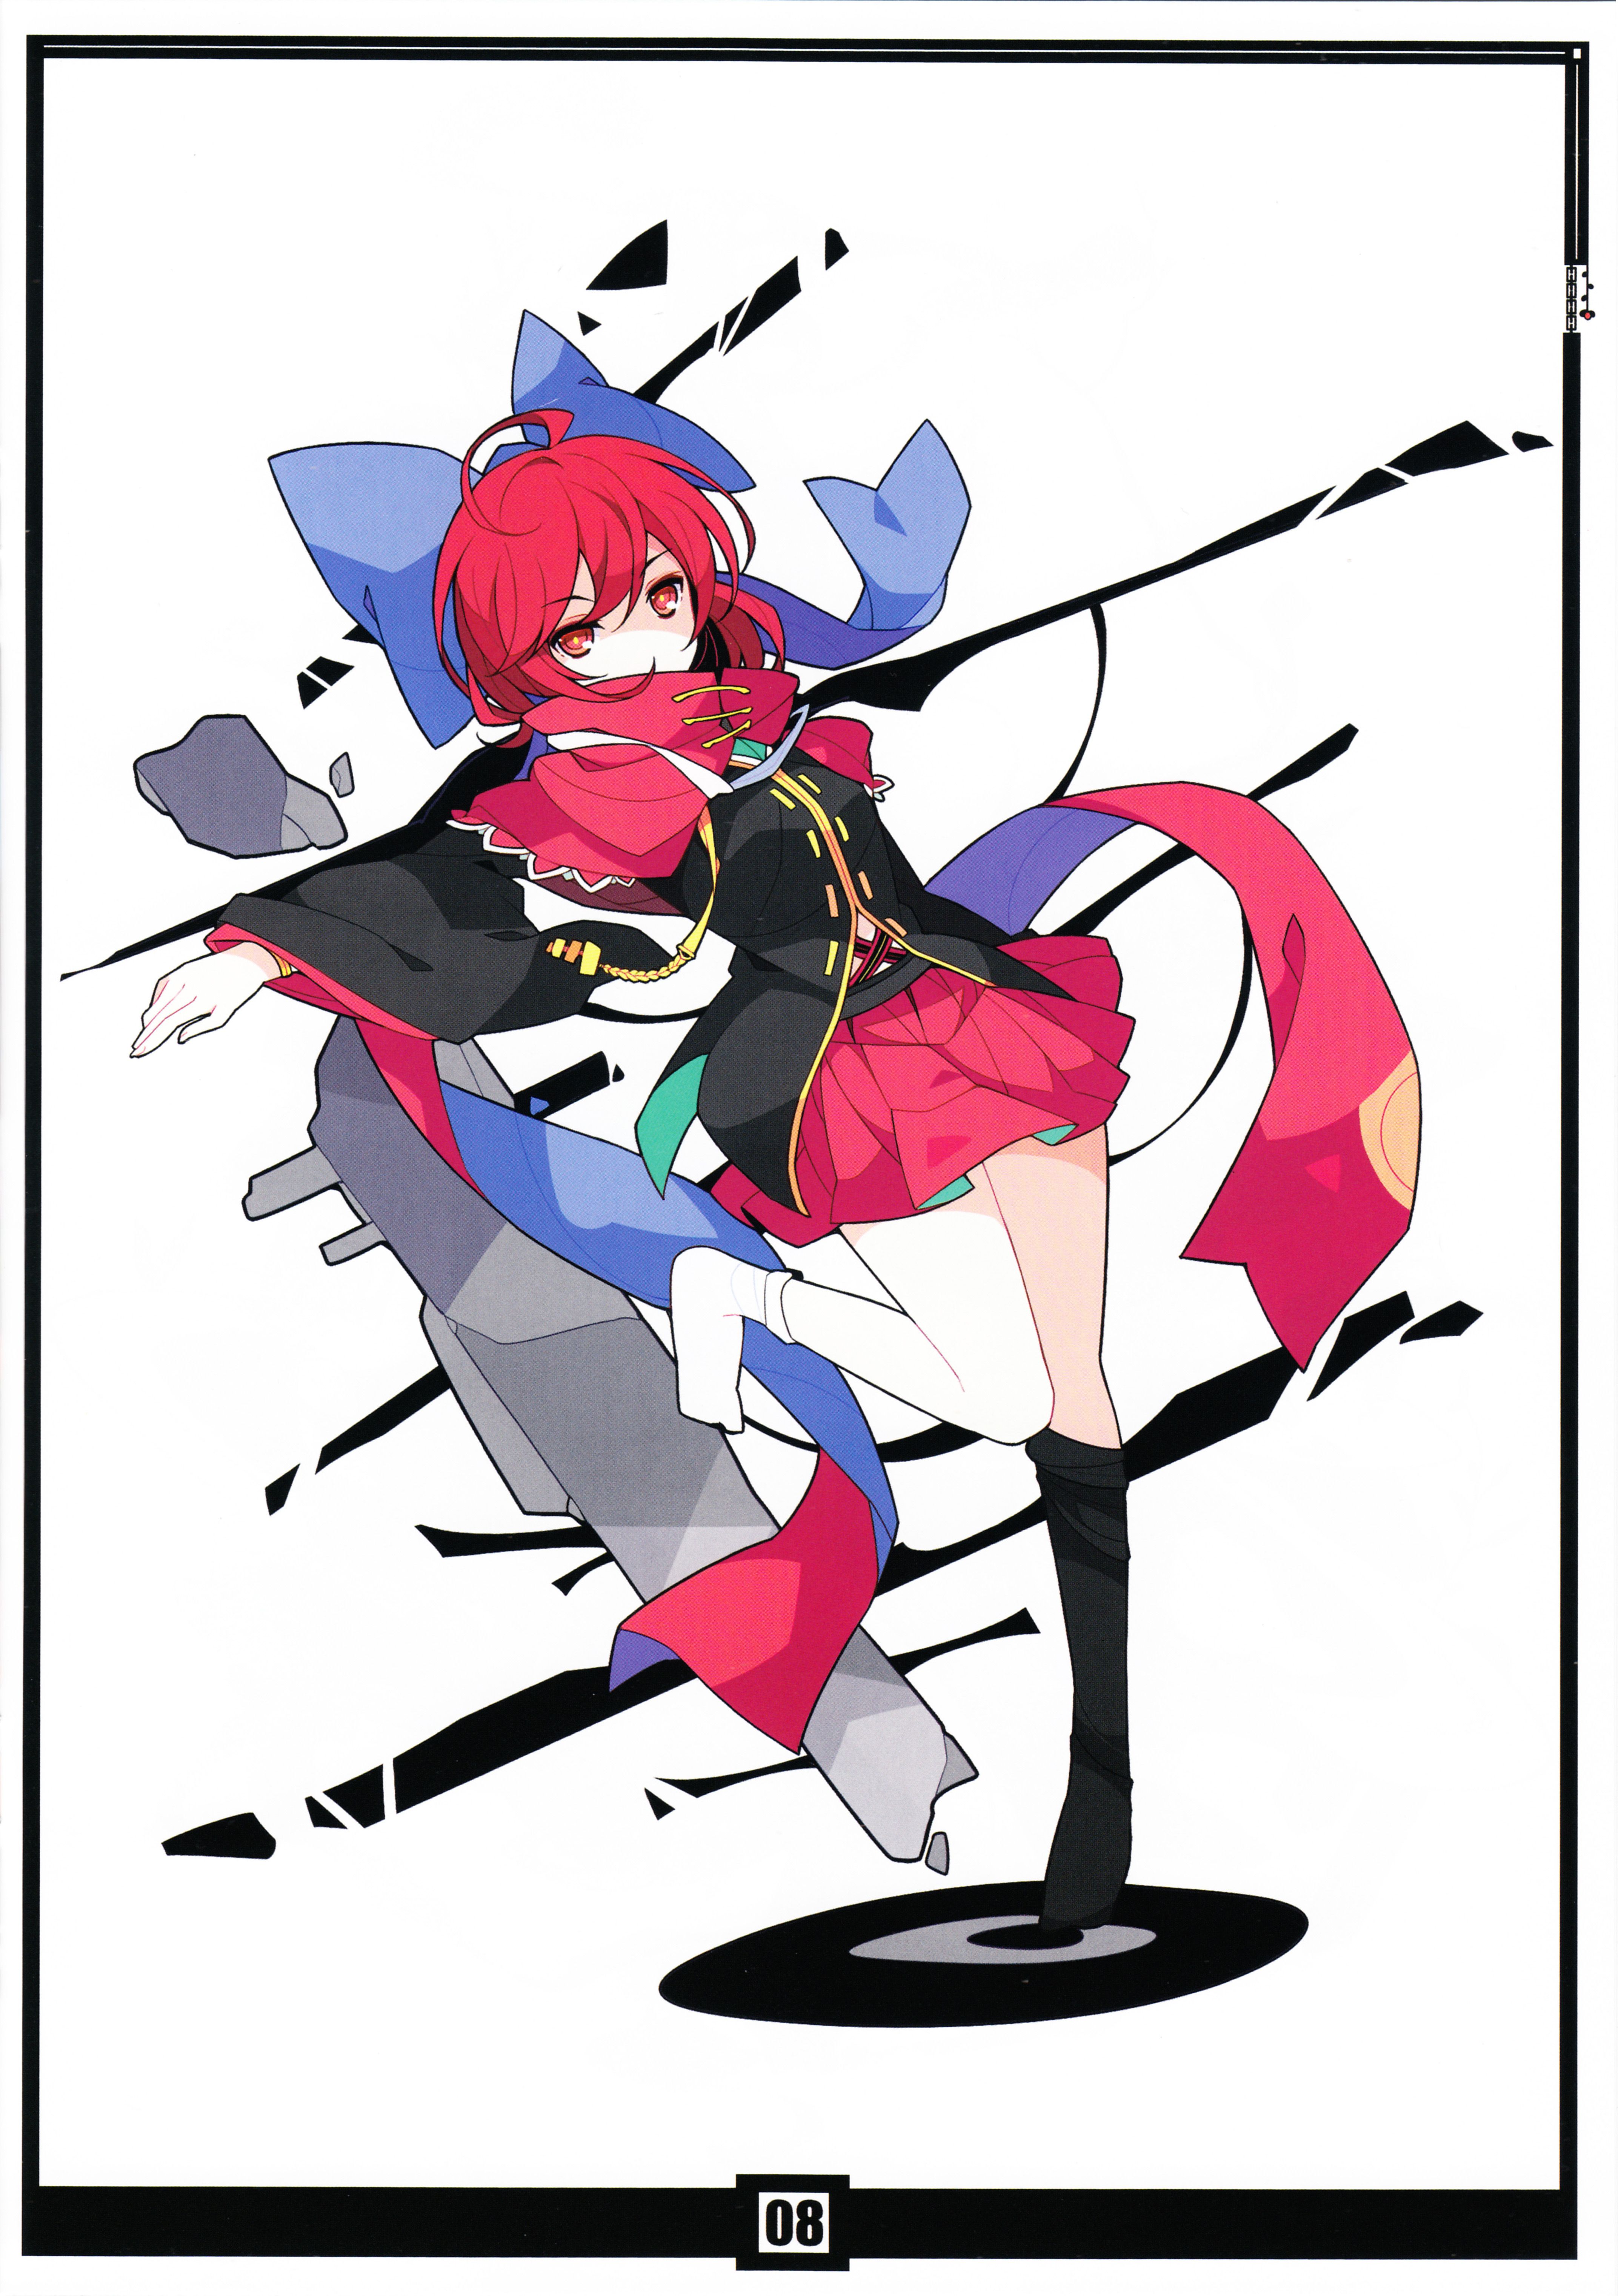 Sekibanki Anime Image Board